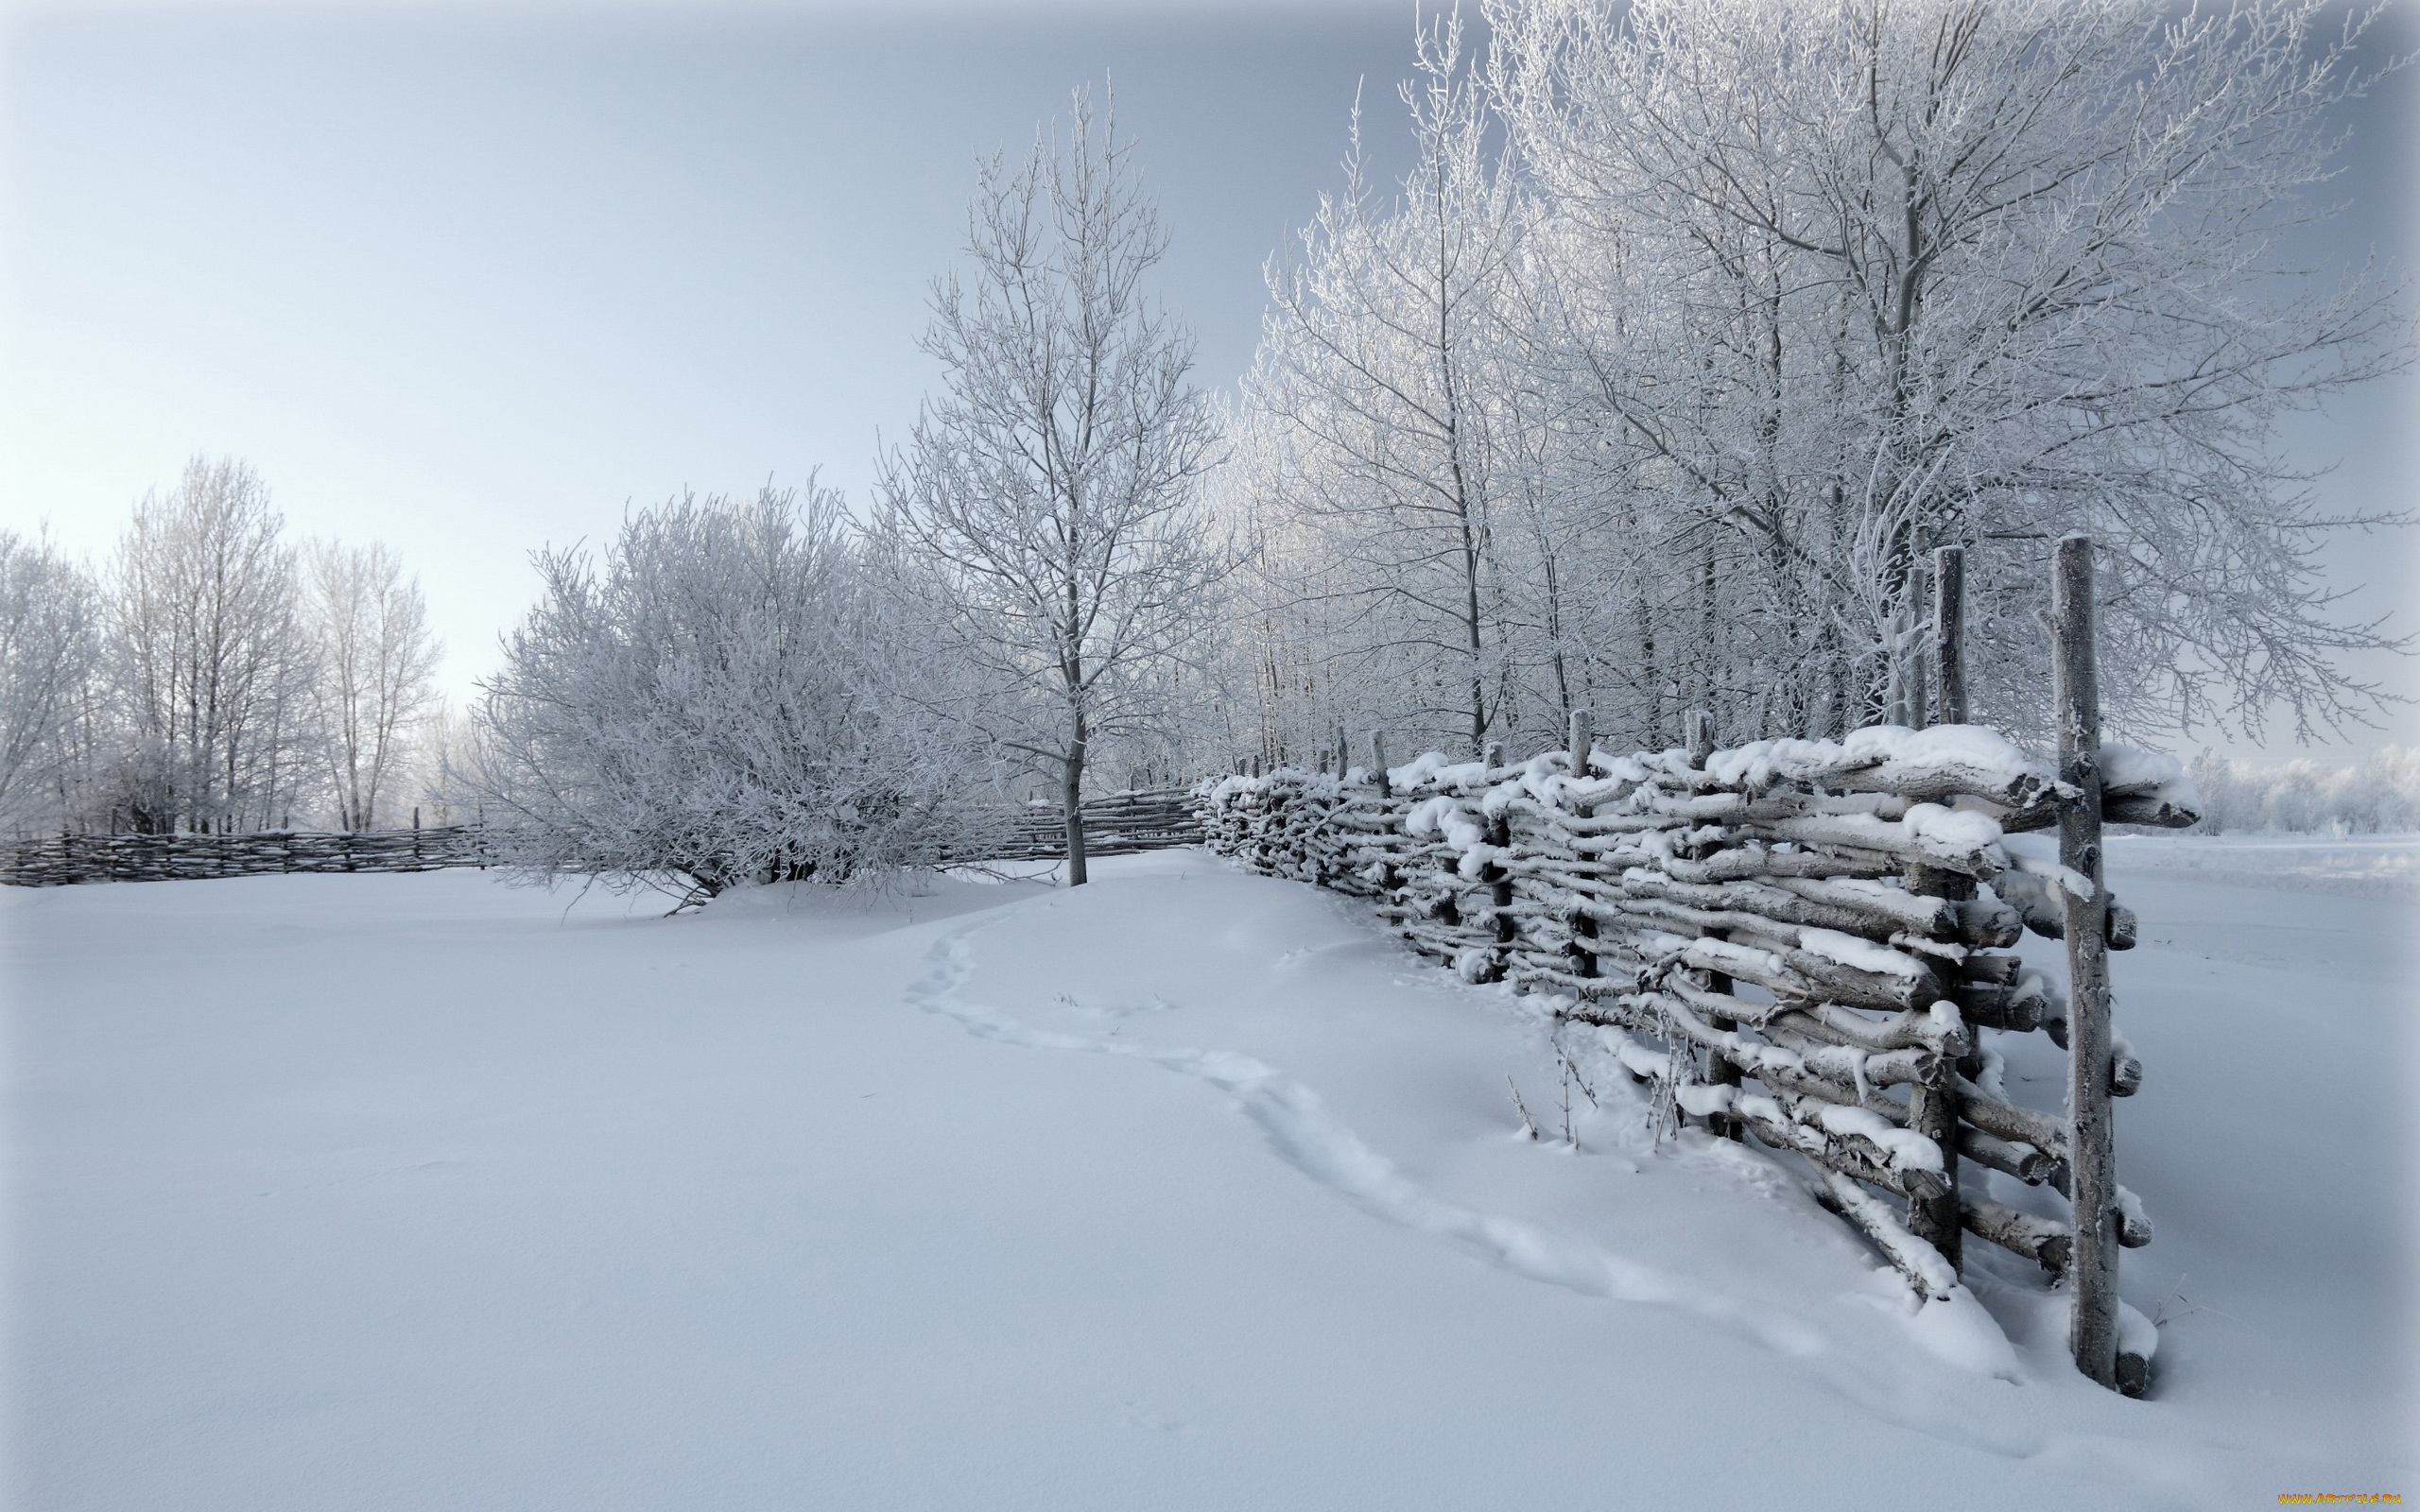 №599105, природа, зима, снег, деревья, забор